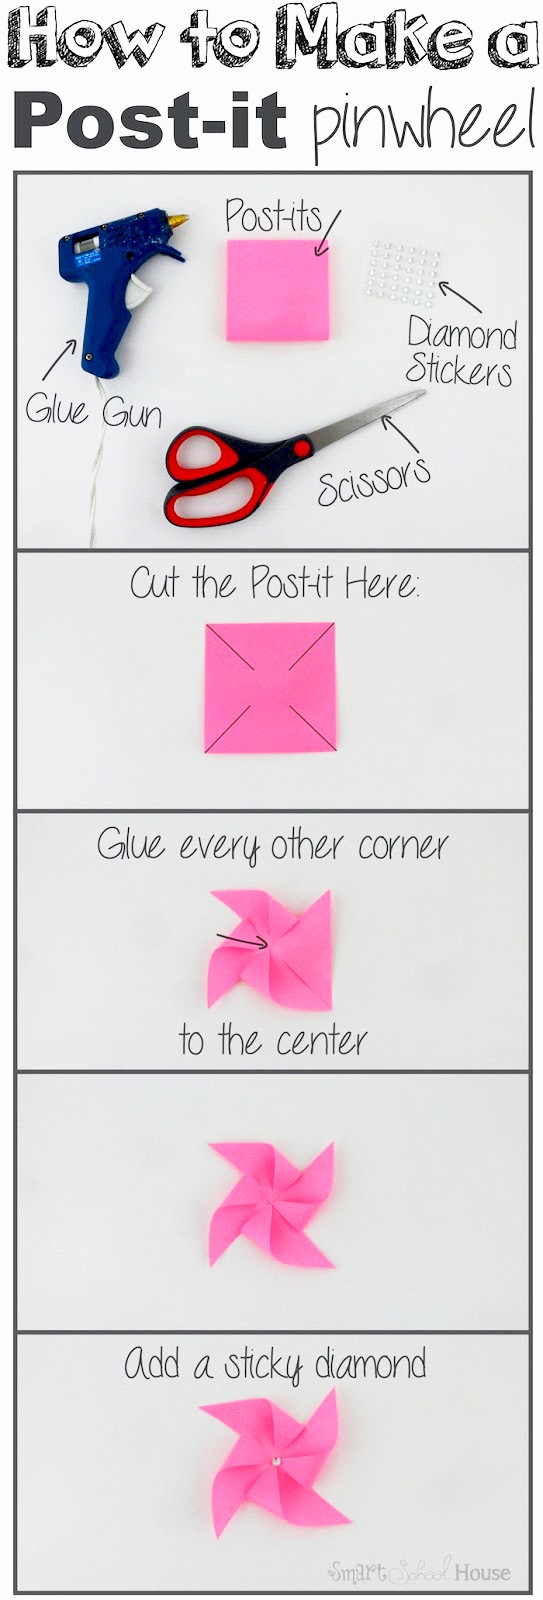 How to Make a Post-it Pinwheel! So CUTE!